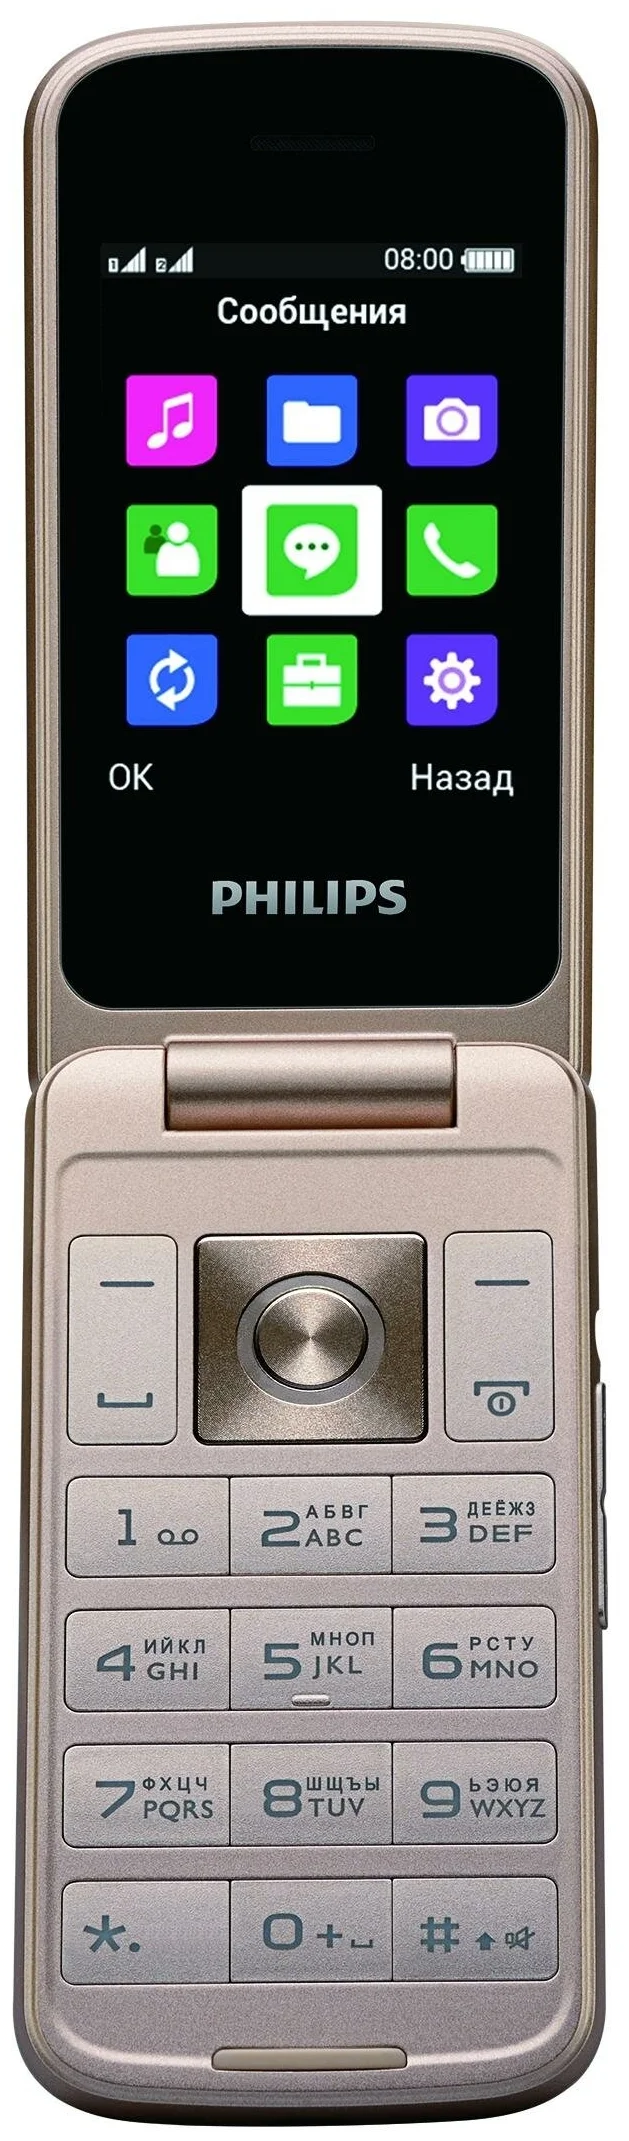 Philips Xenium E255 - вес: 106 г